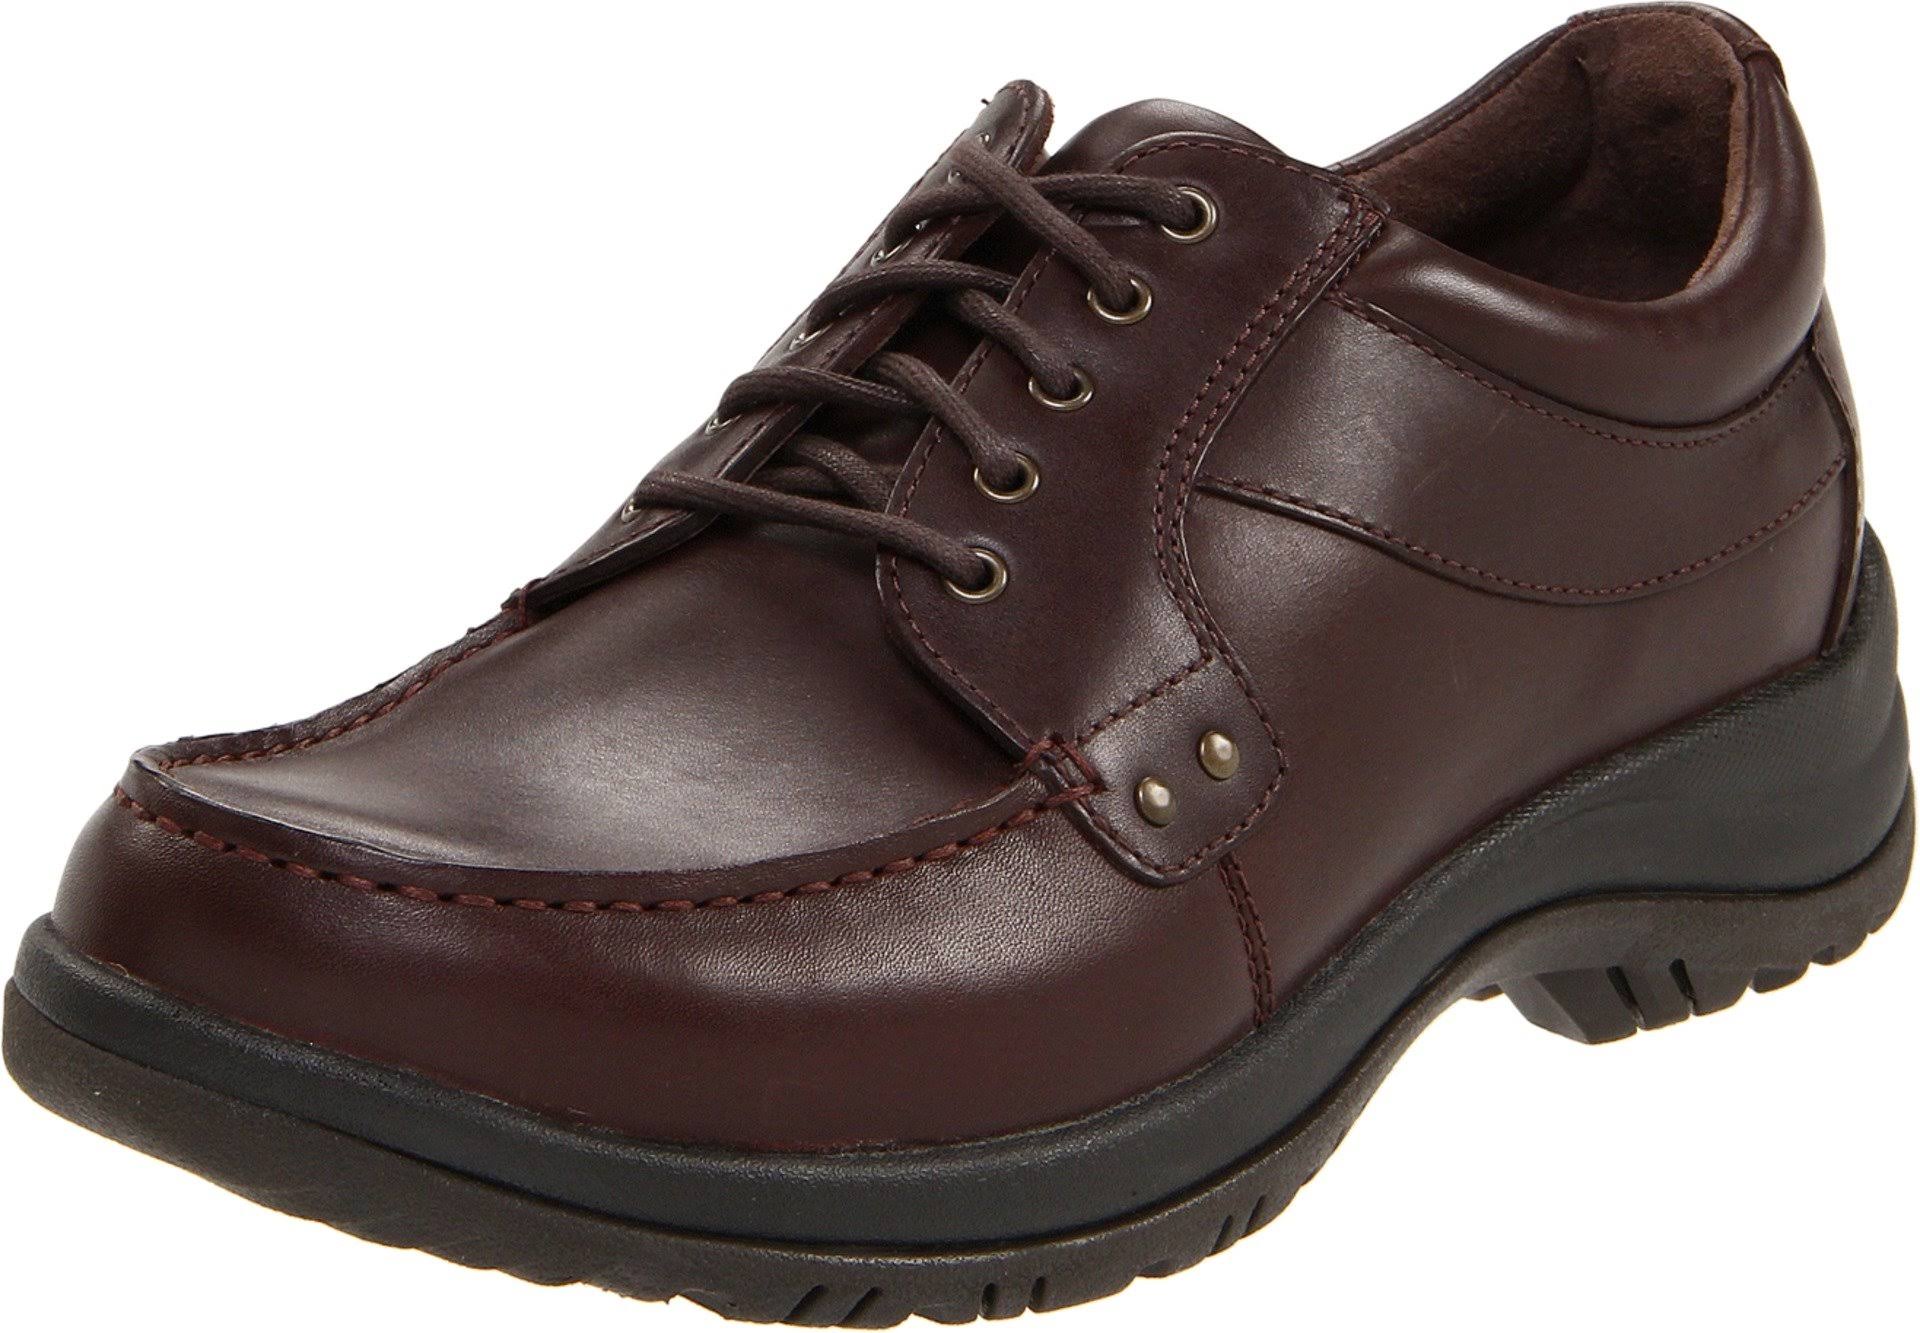 Dansko 9505 Men's Wyatt Full Grain Leather Lace Up Oxfords Shoes - Brown, 41 EU